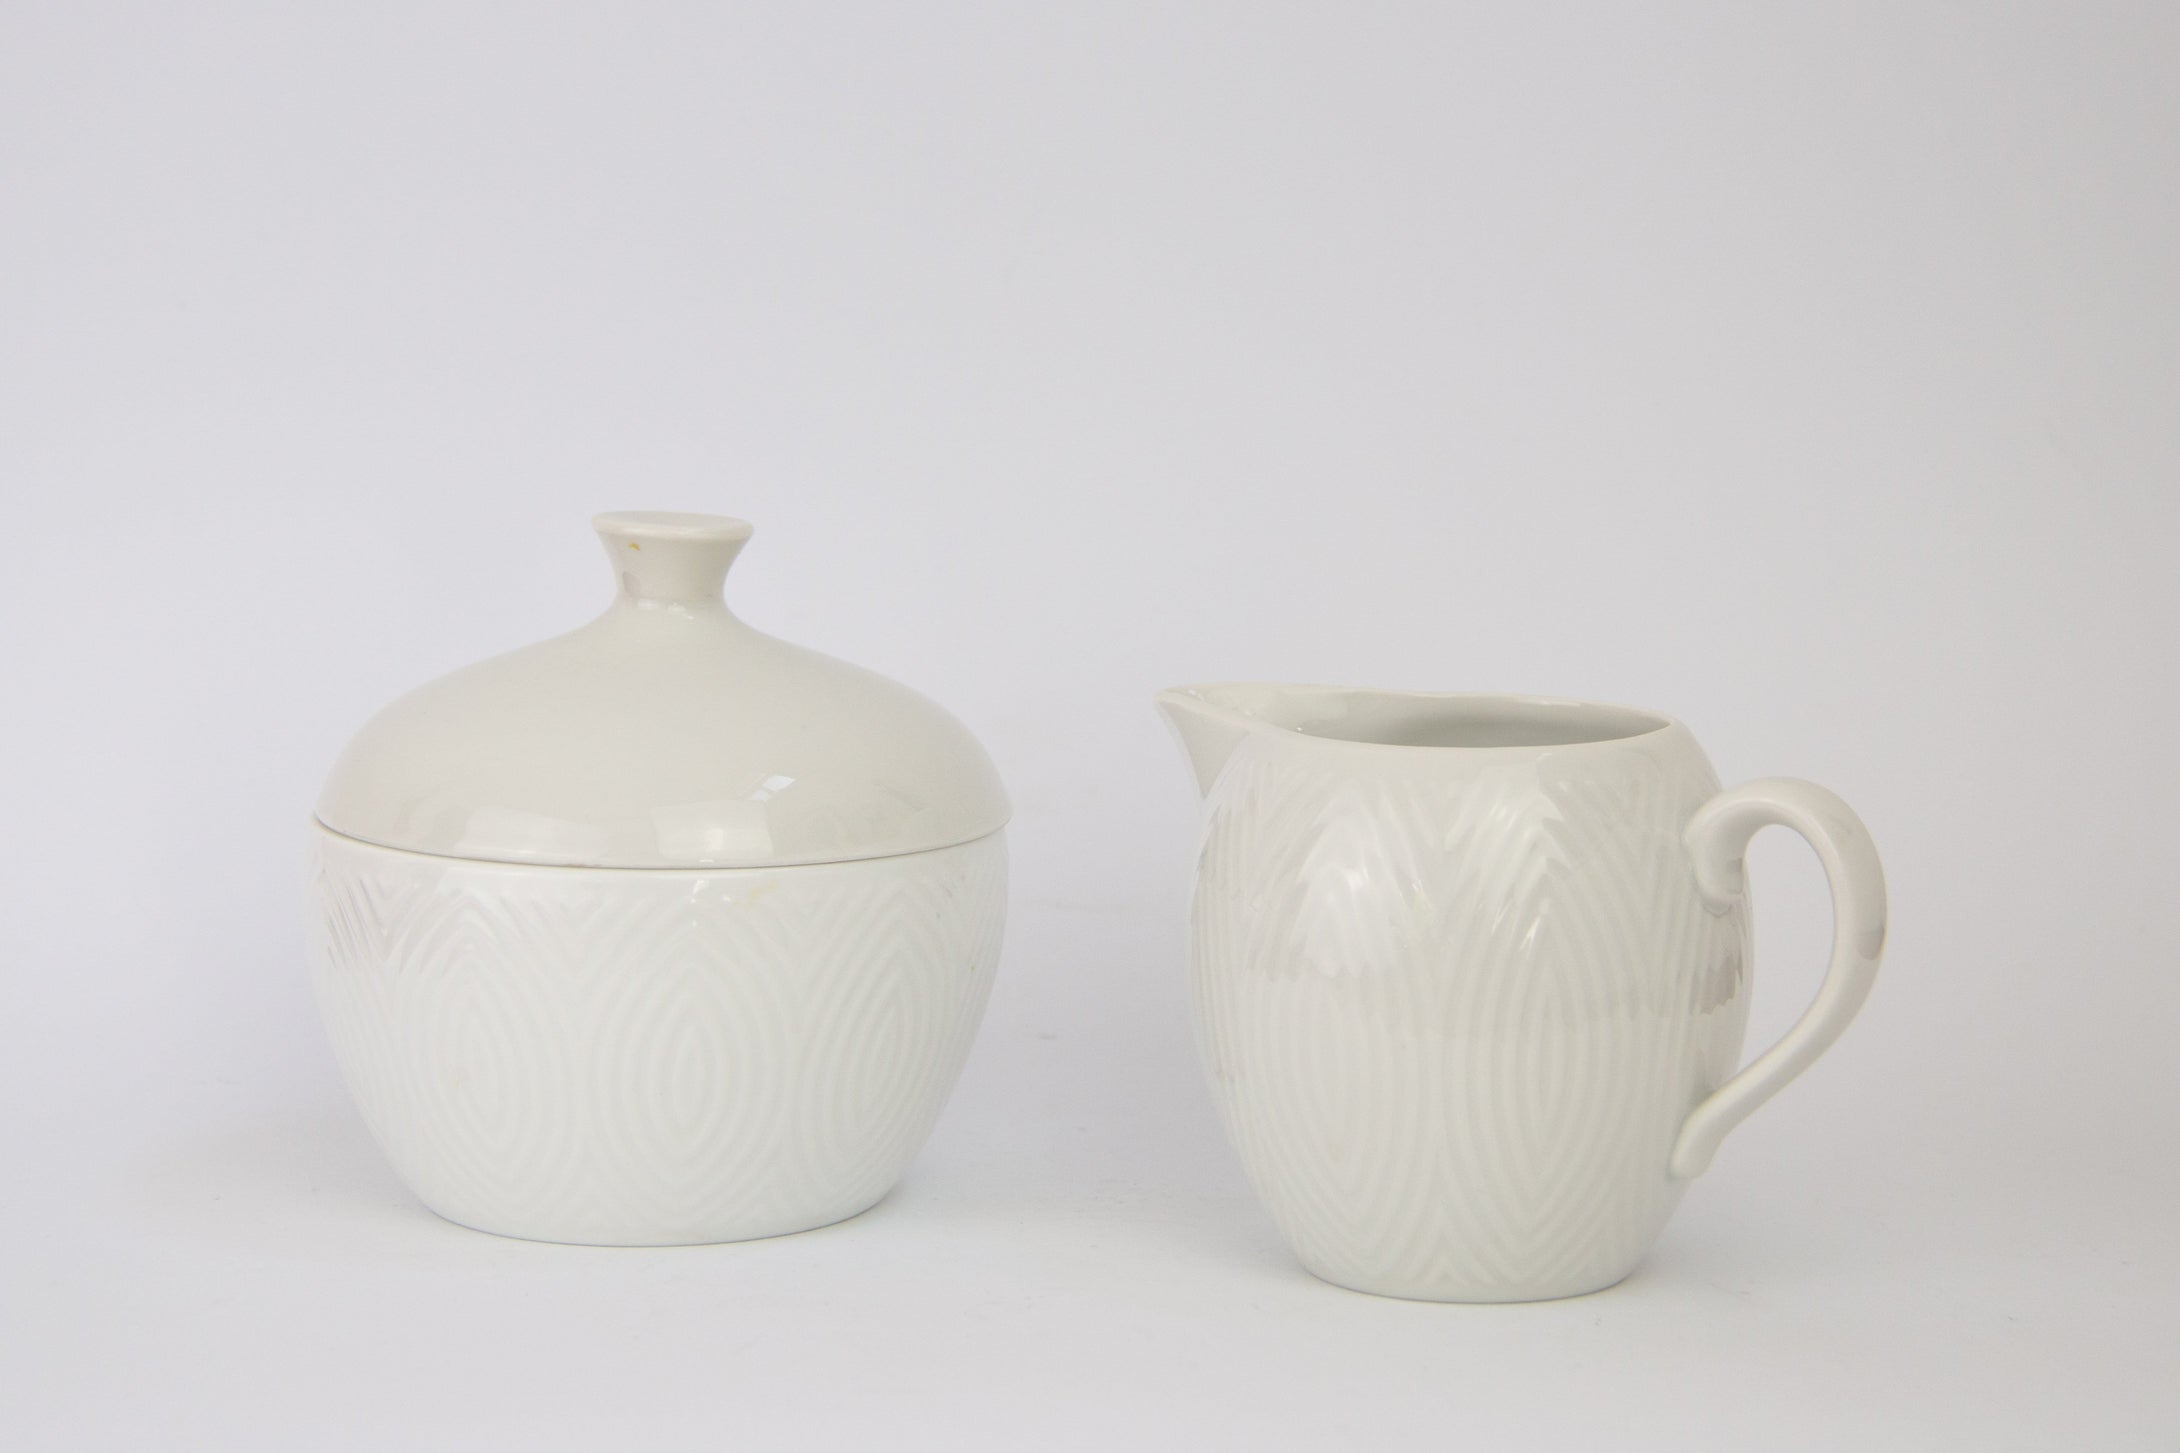 milk jug and sugar pot by Axel Salto for Royal copenhagen